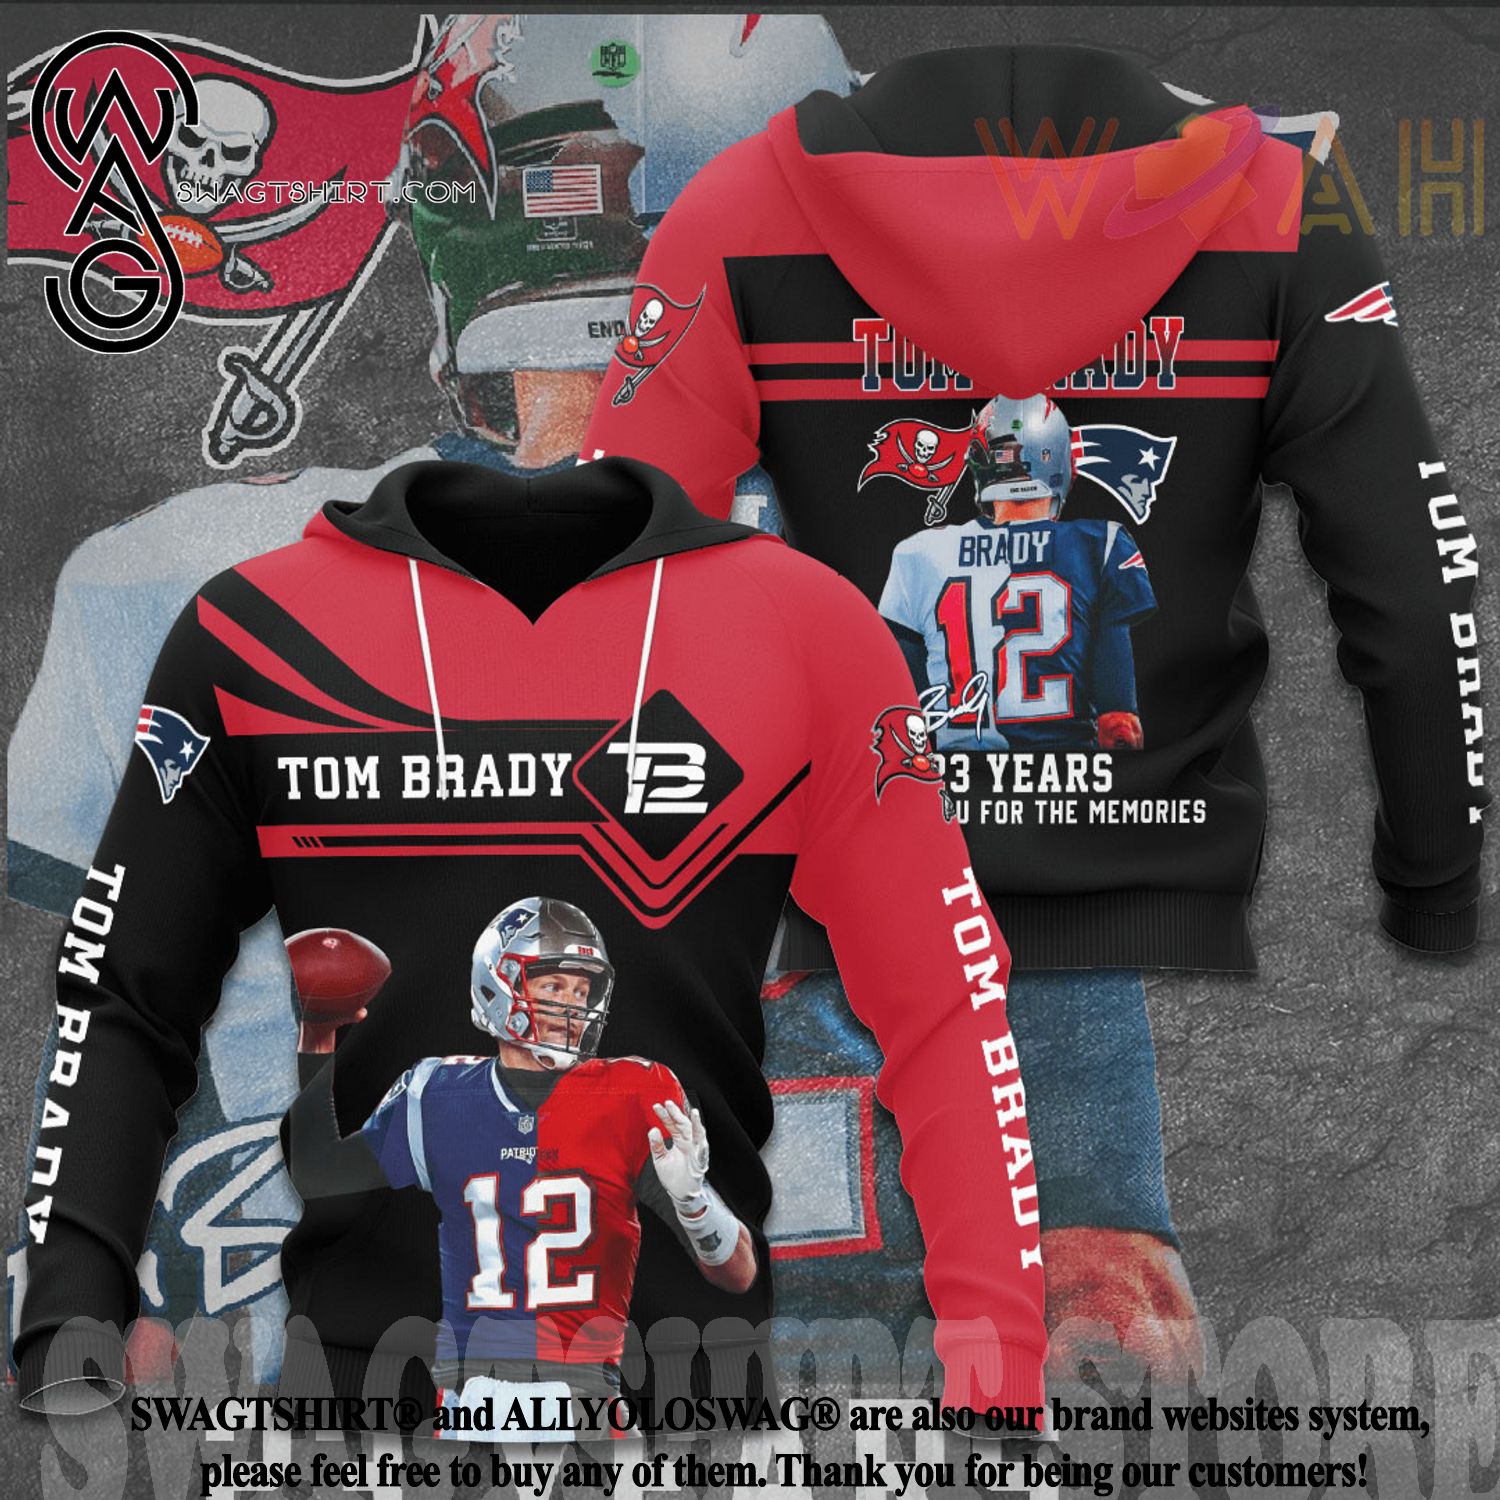 Best Selling Product] Tom Brady NFL New Fashion Full Printed Shirt